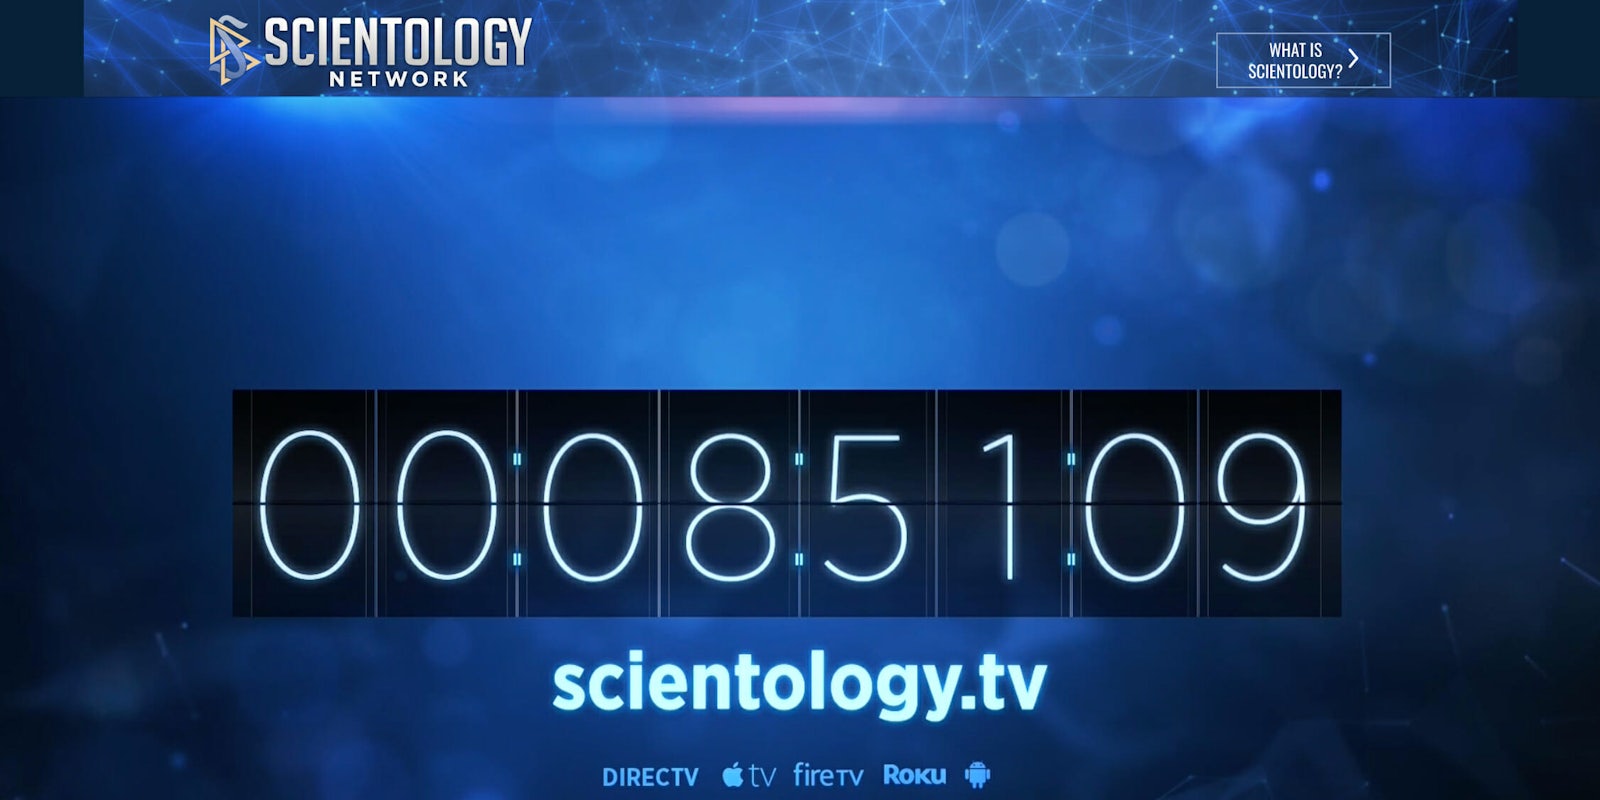 Scientology TV network